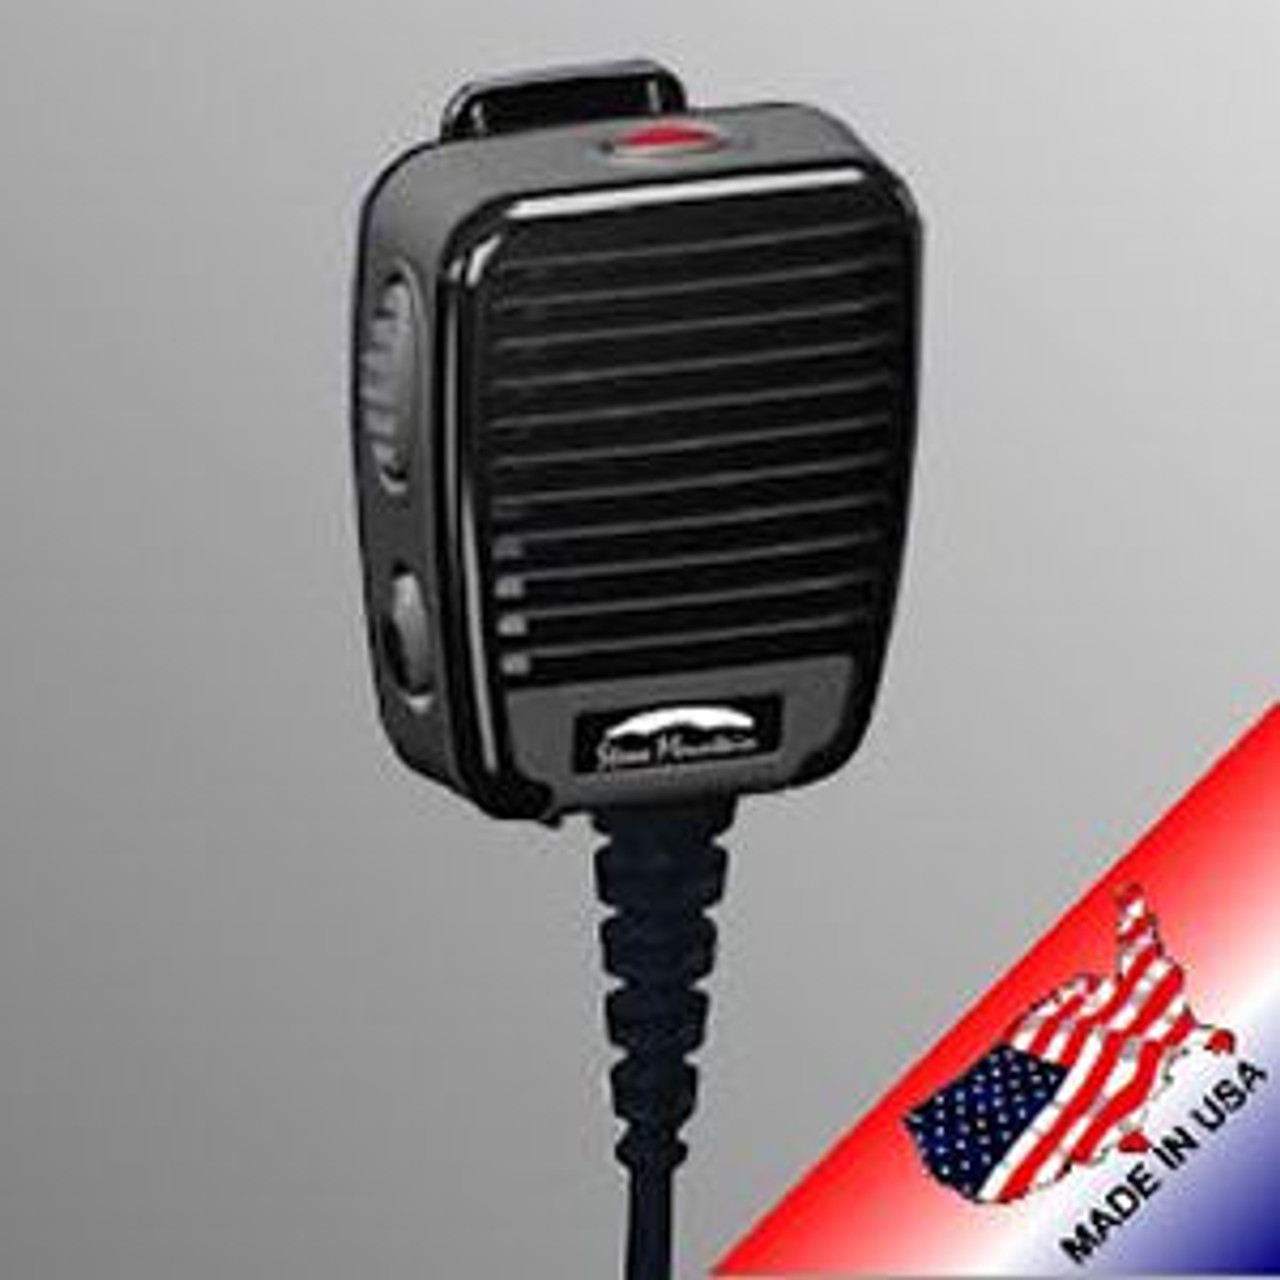 EF Johnson 5000 Noise Canceling Ruggedized Waterproof IP68 High Volume Speaker Mic